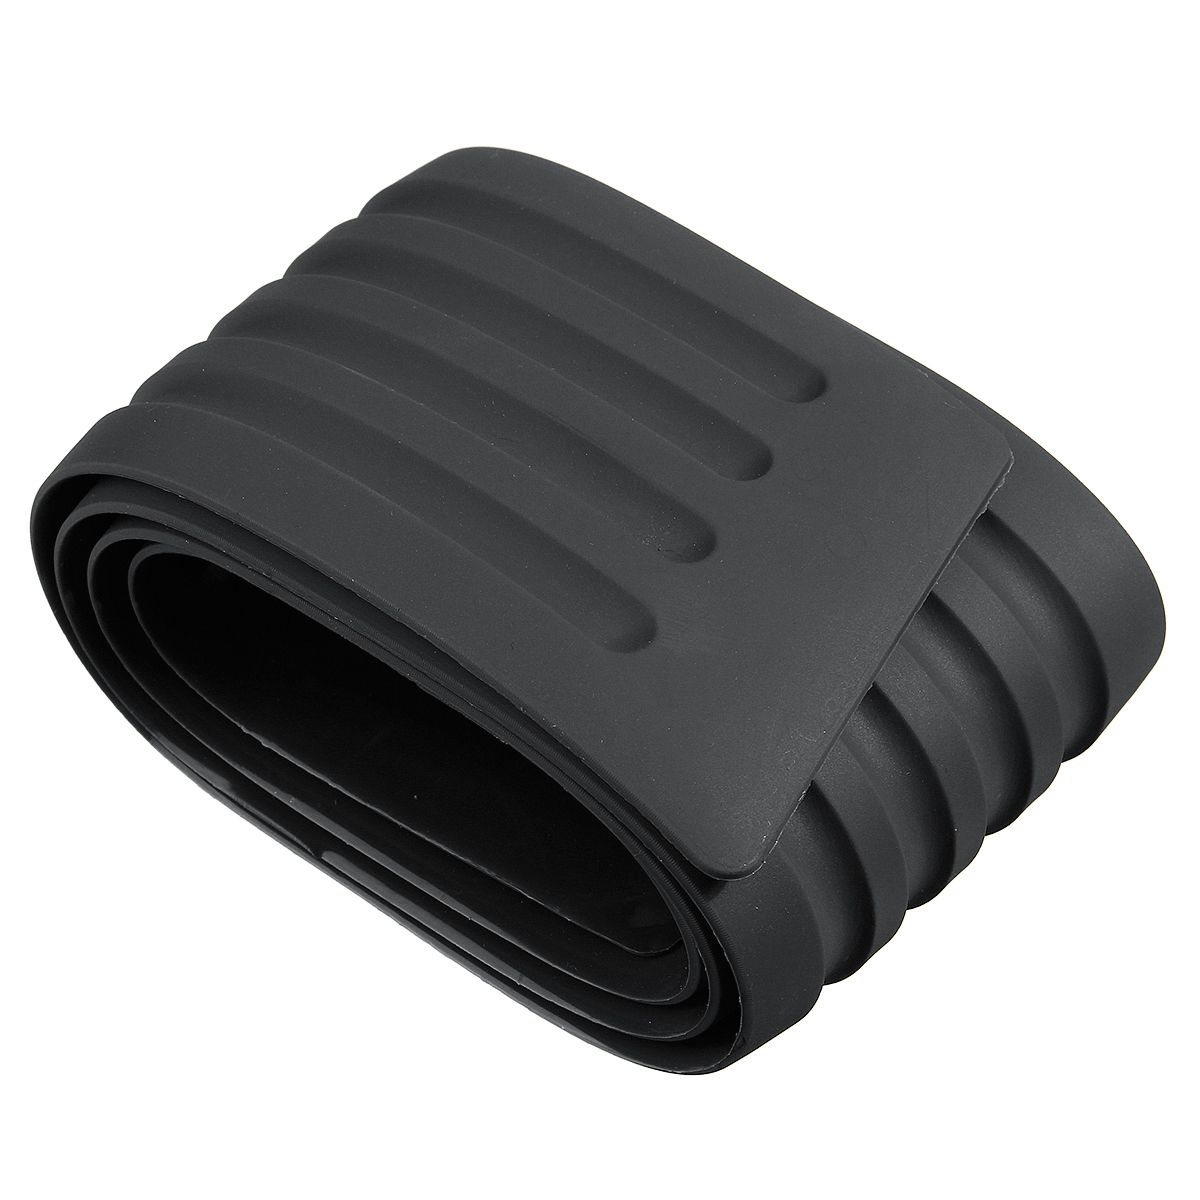 8x90cm-Car-Rear-Bumper-PVC-Rubber-Protector-Cover-Sill-Plate-Trunk-Pad-Trim-1526347